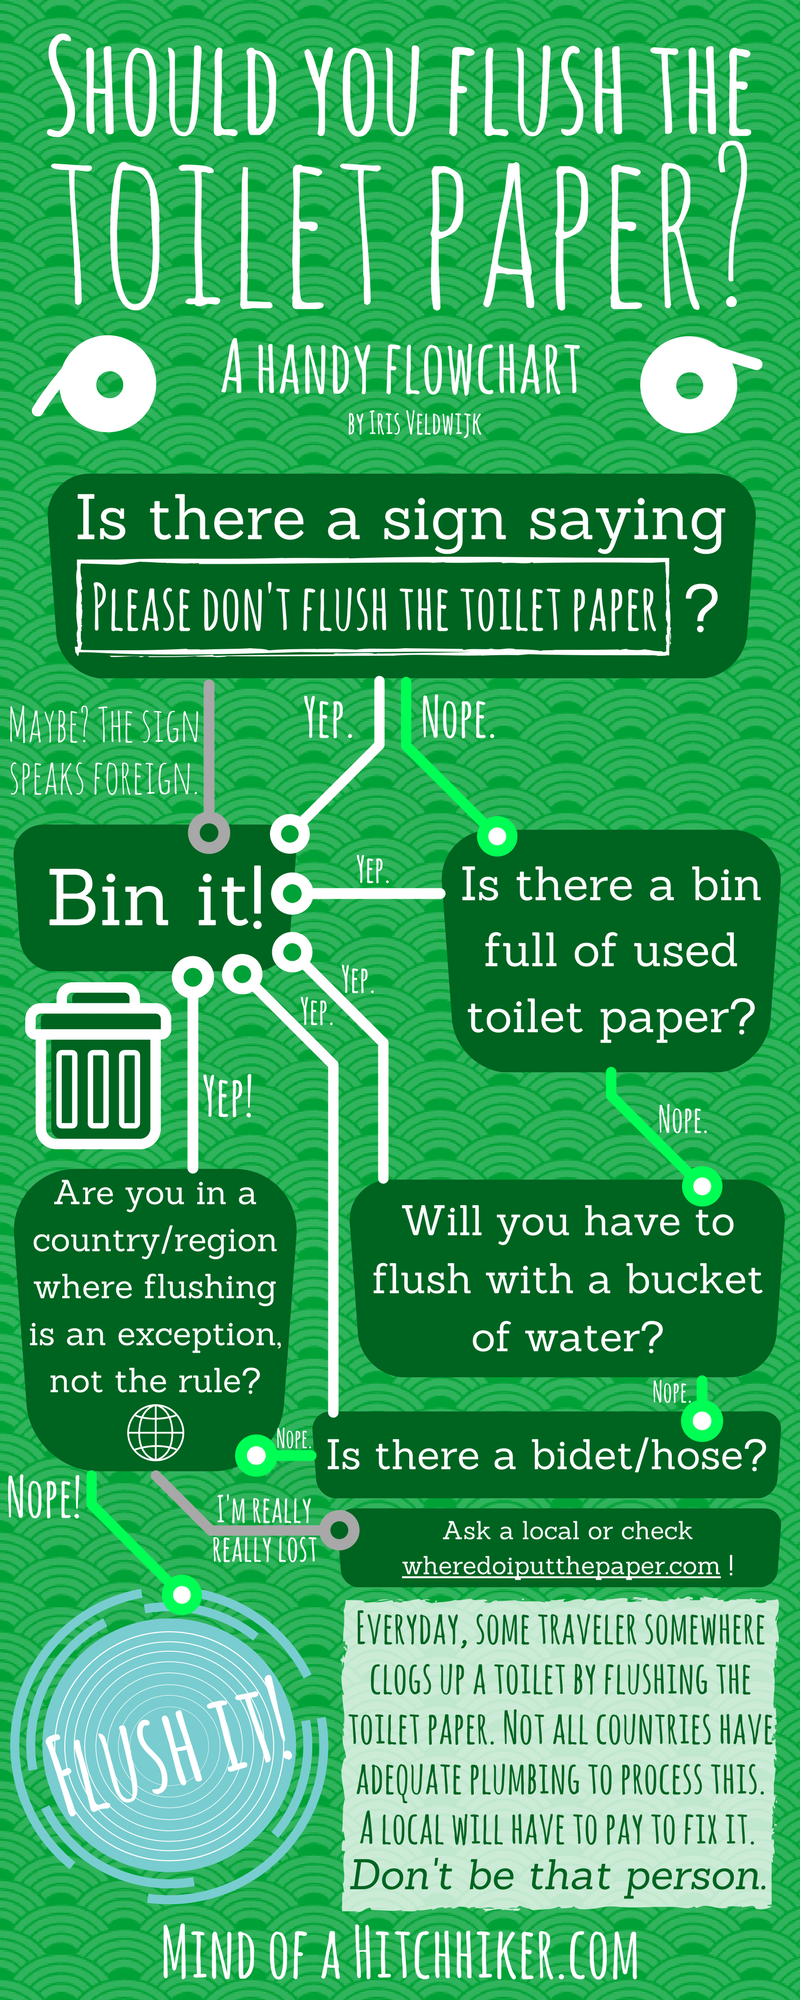  Should you flush the toilet paper